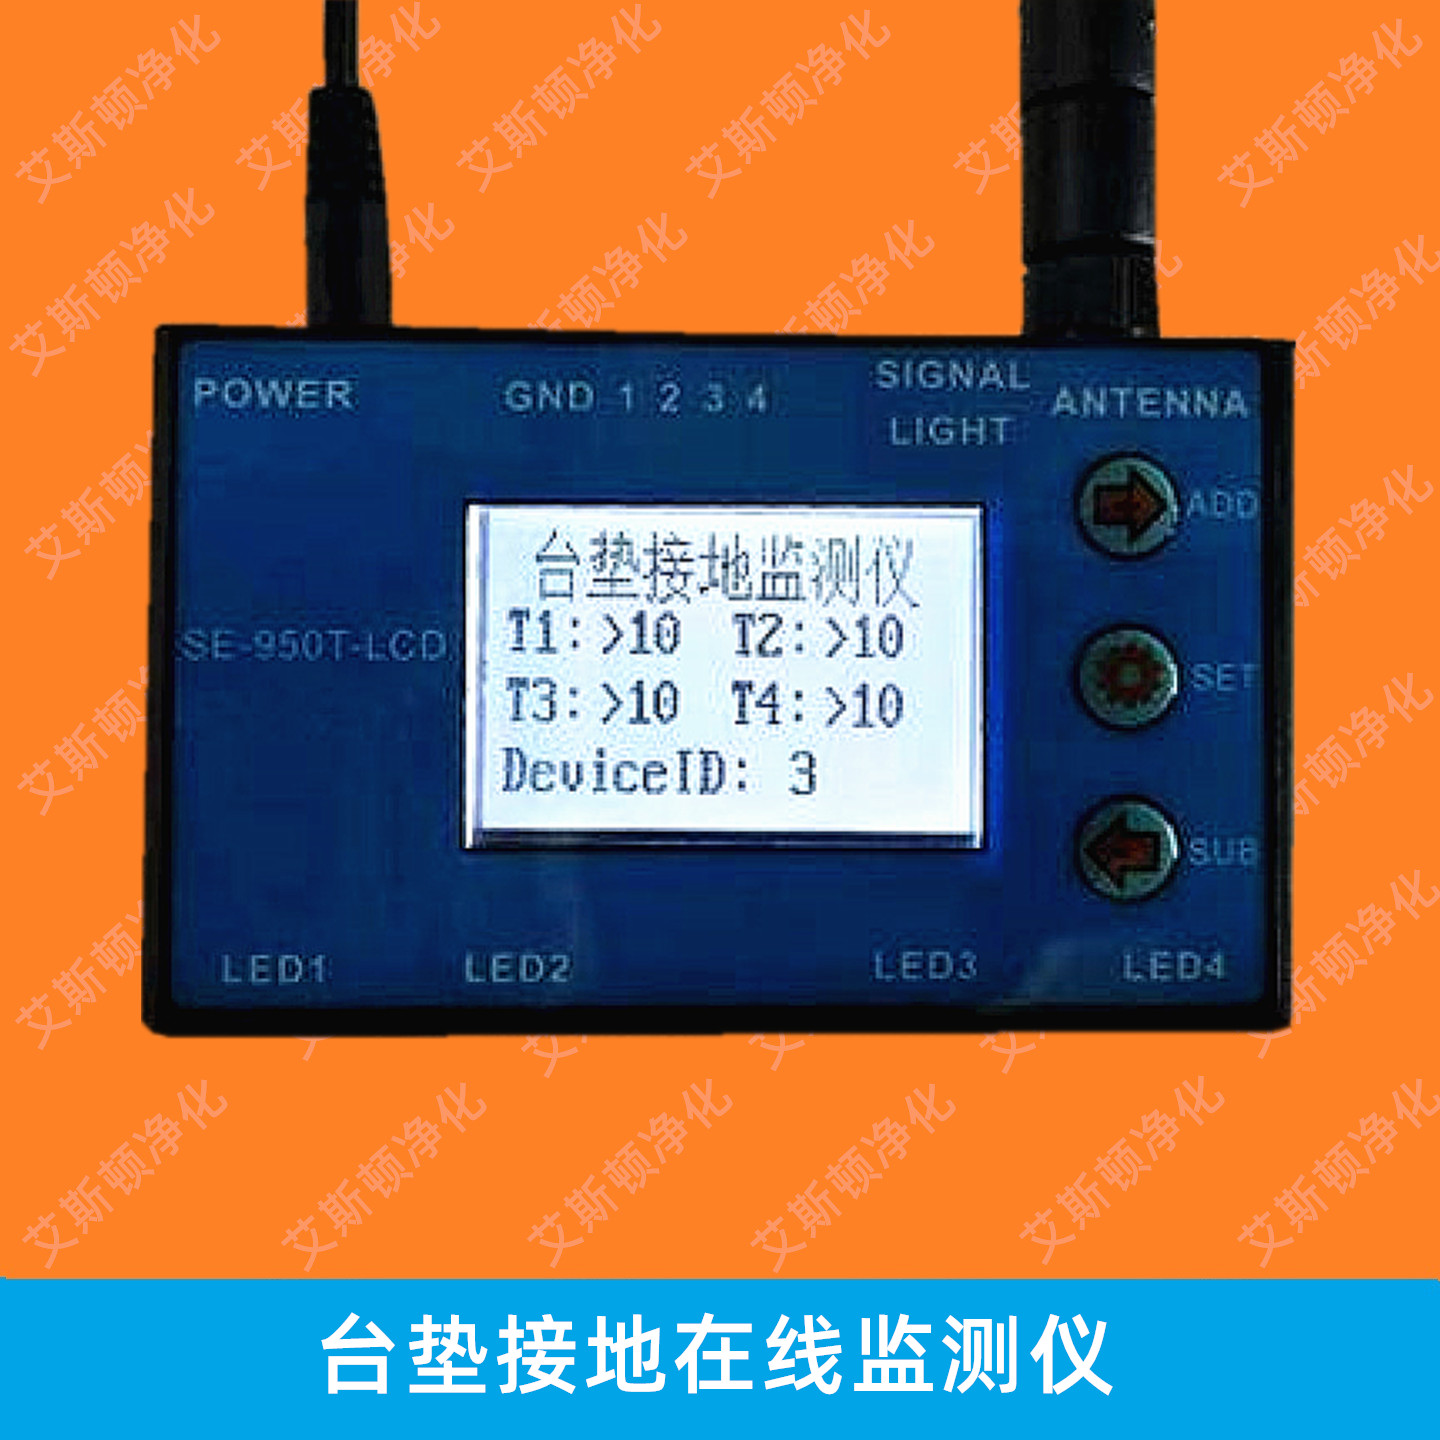 SE-950T-LCD-5台垫接地在线监控仪_副本.jpg